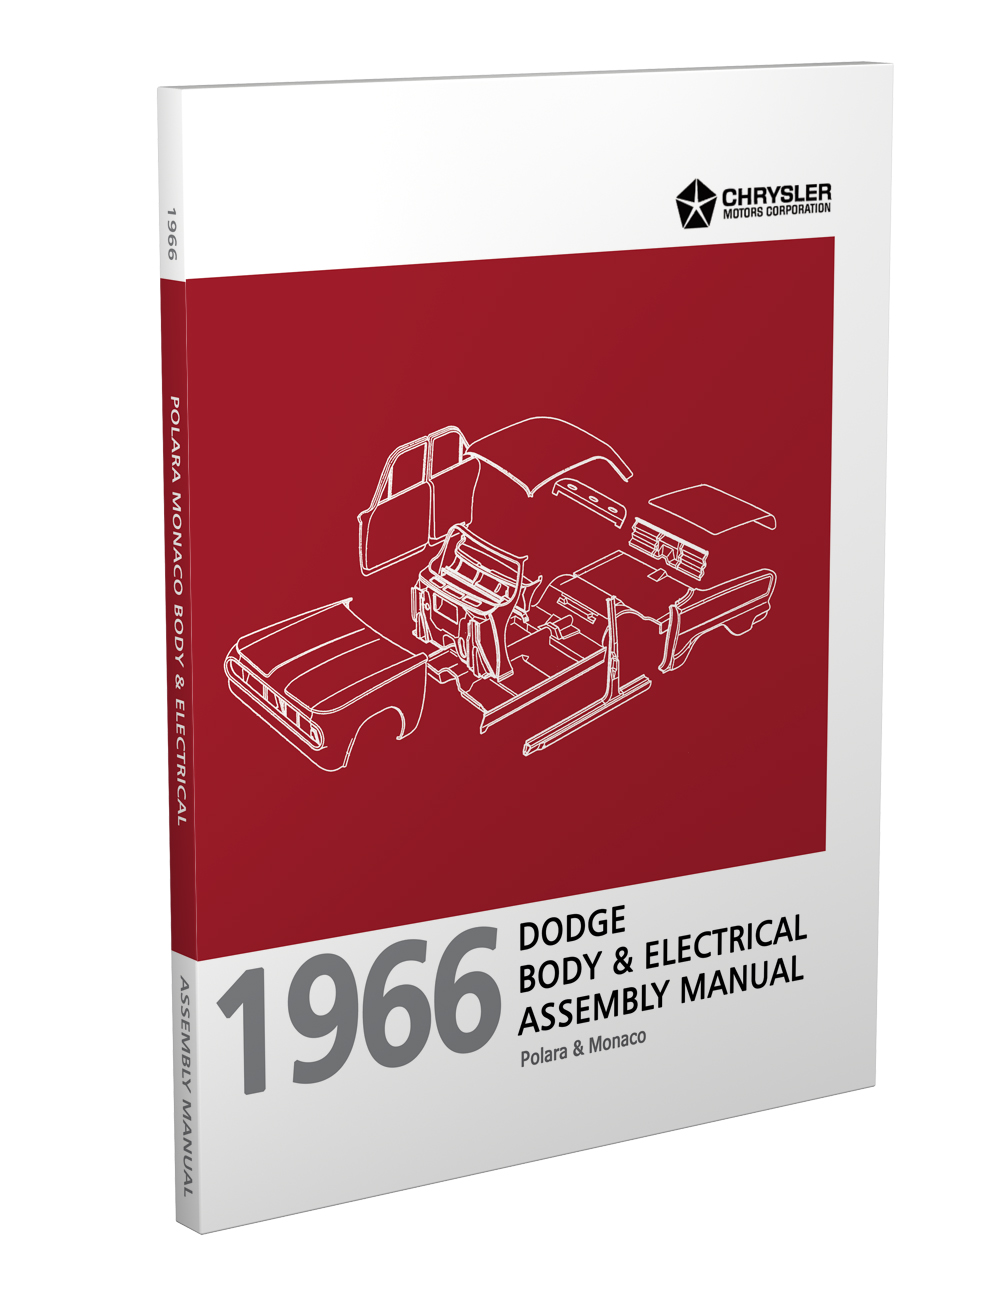 1966 Dodge Polara and Monaco Body & Electrical Assembly Manual Reprint